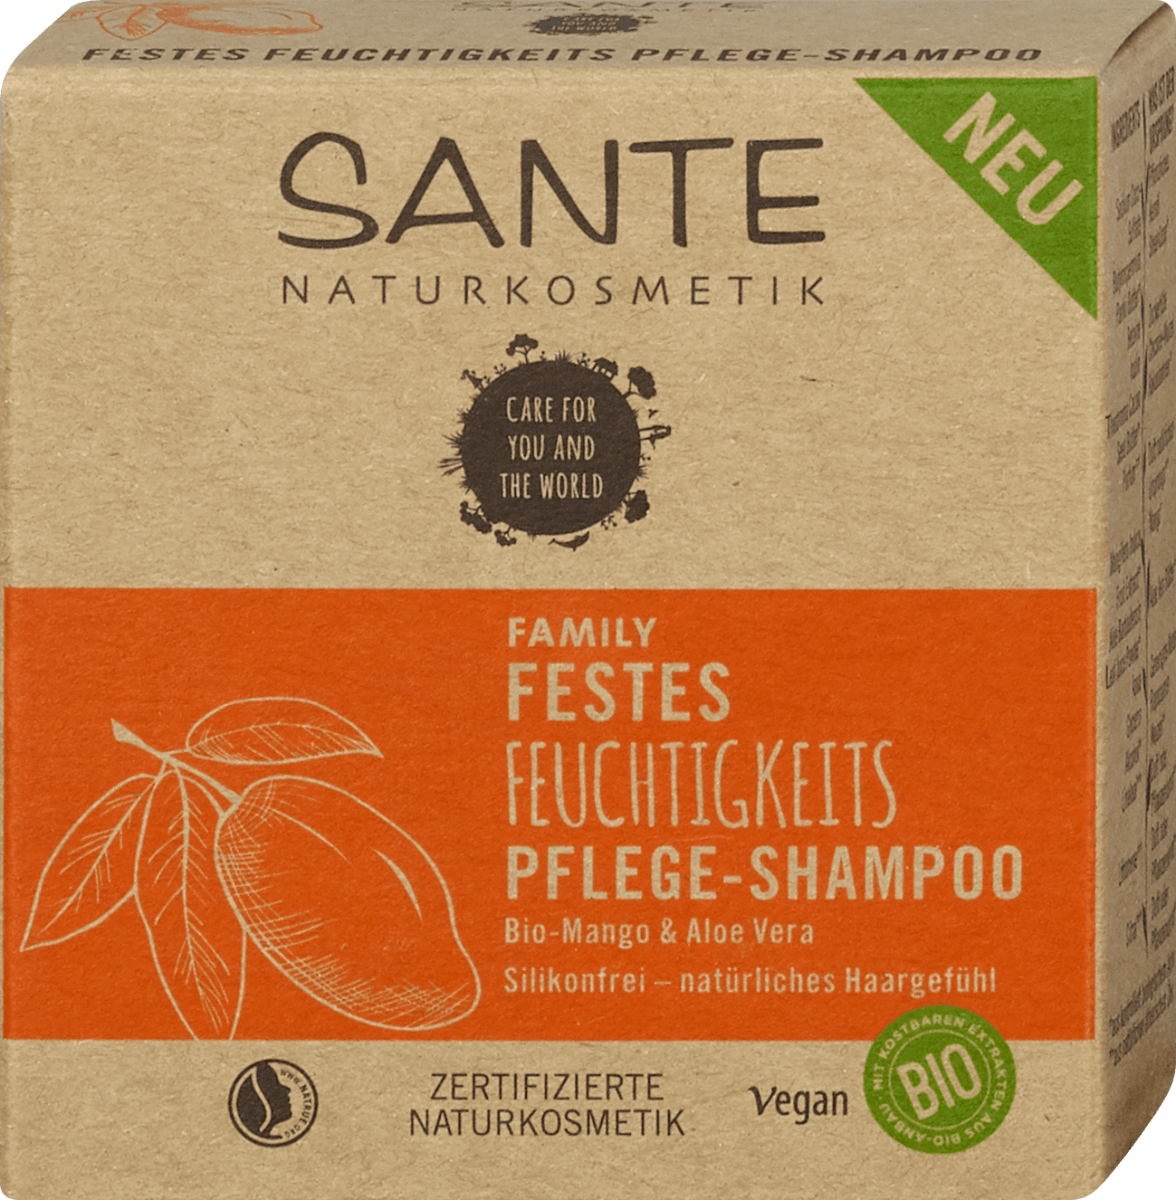 SANTE NATURKOSMETIK Family Festes Feuchtigkeits Pflege-Shampoo, 60 g